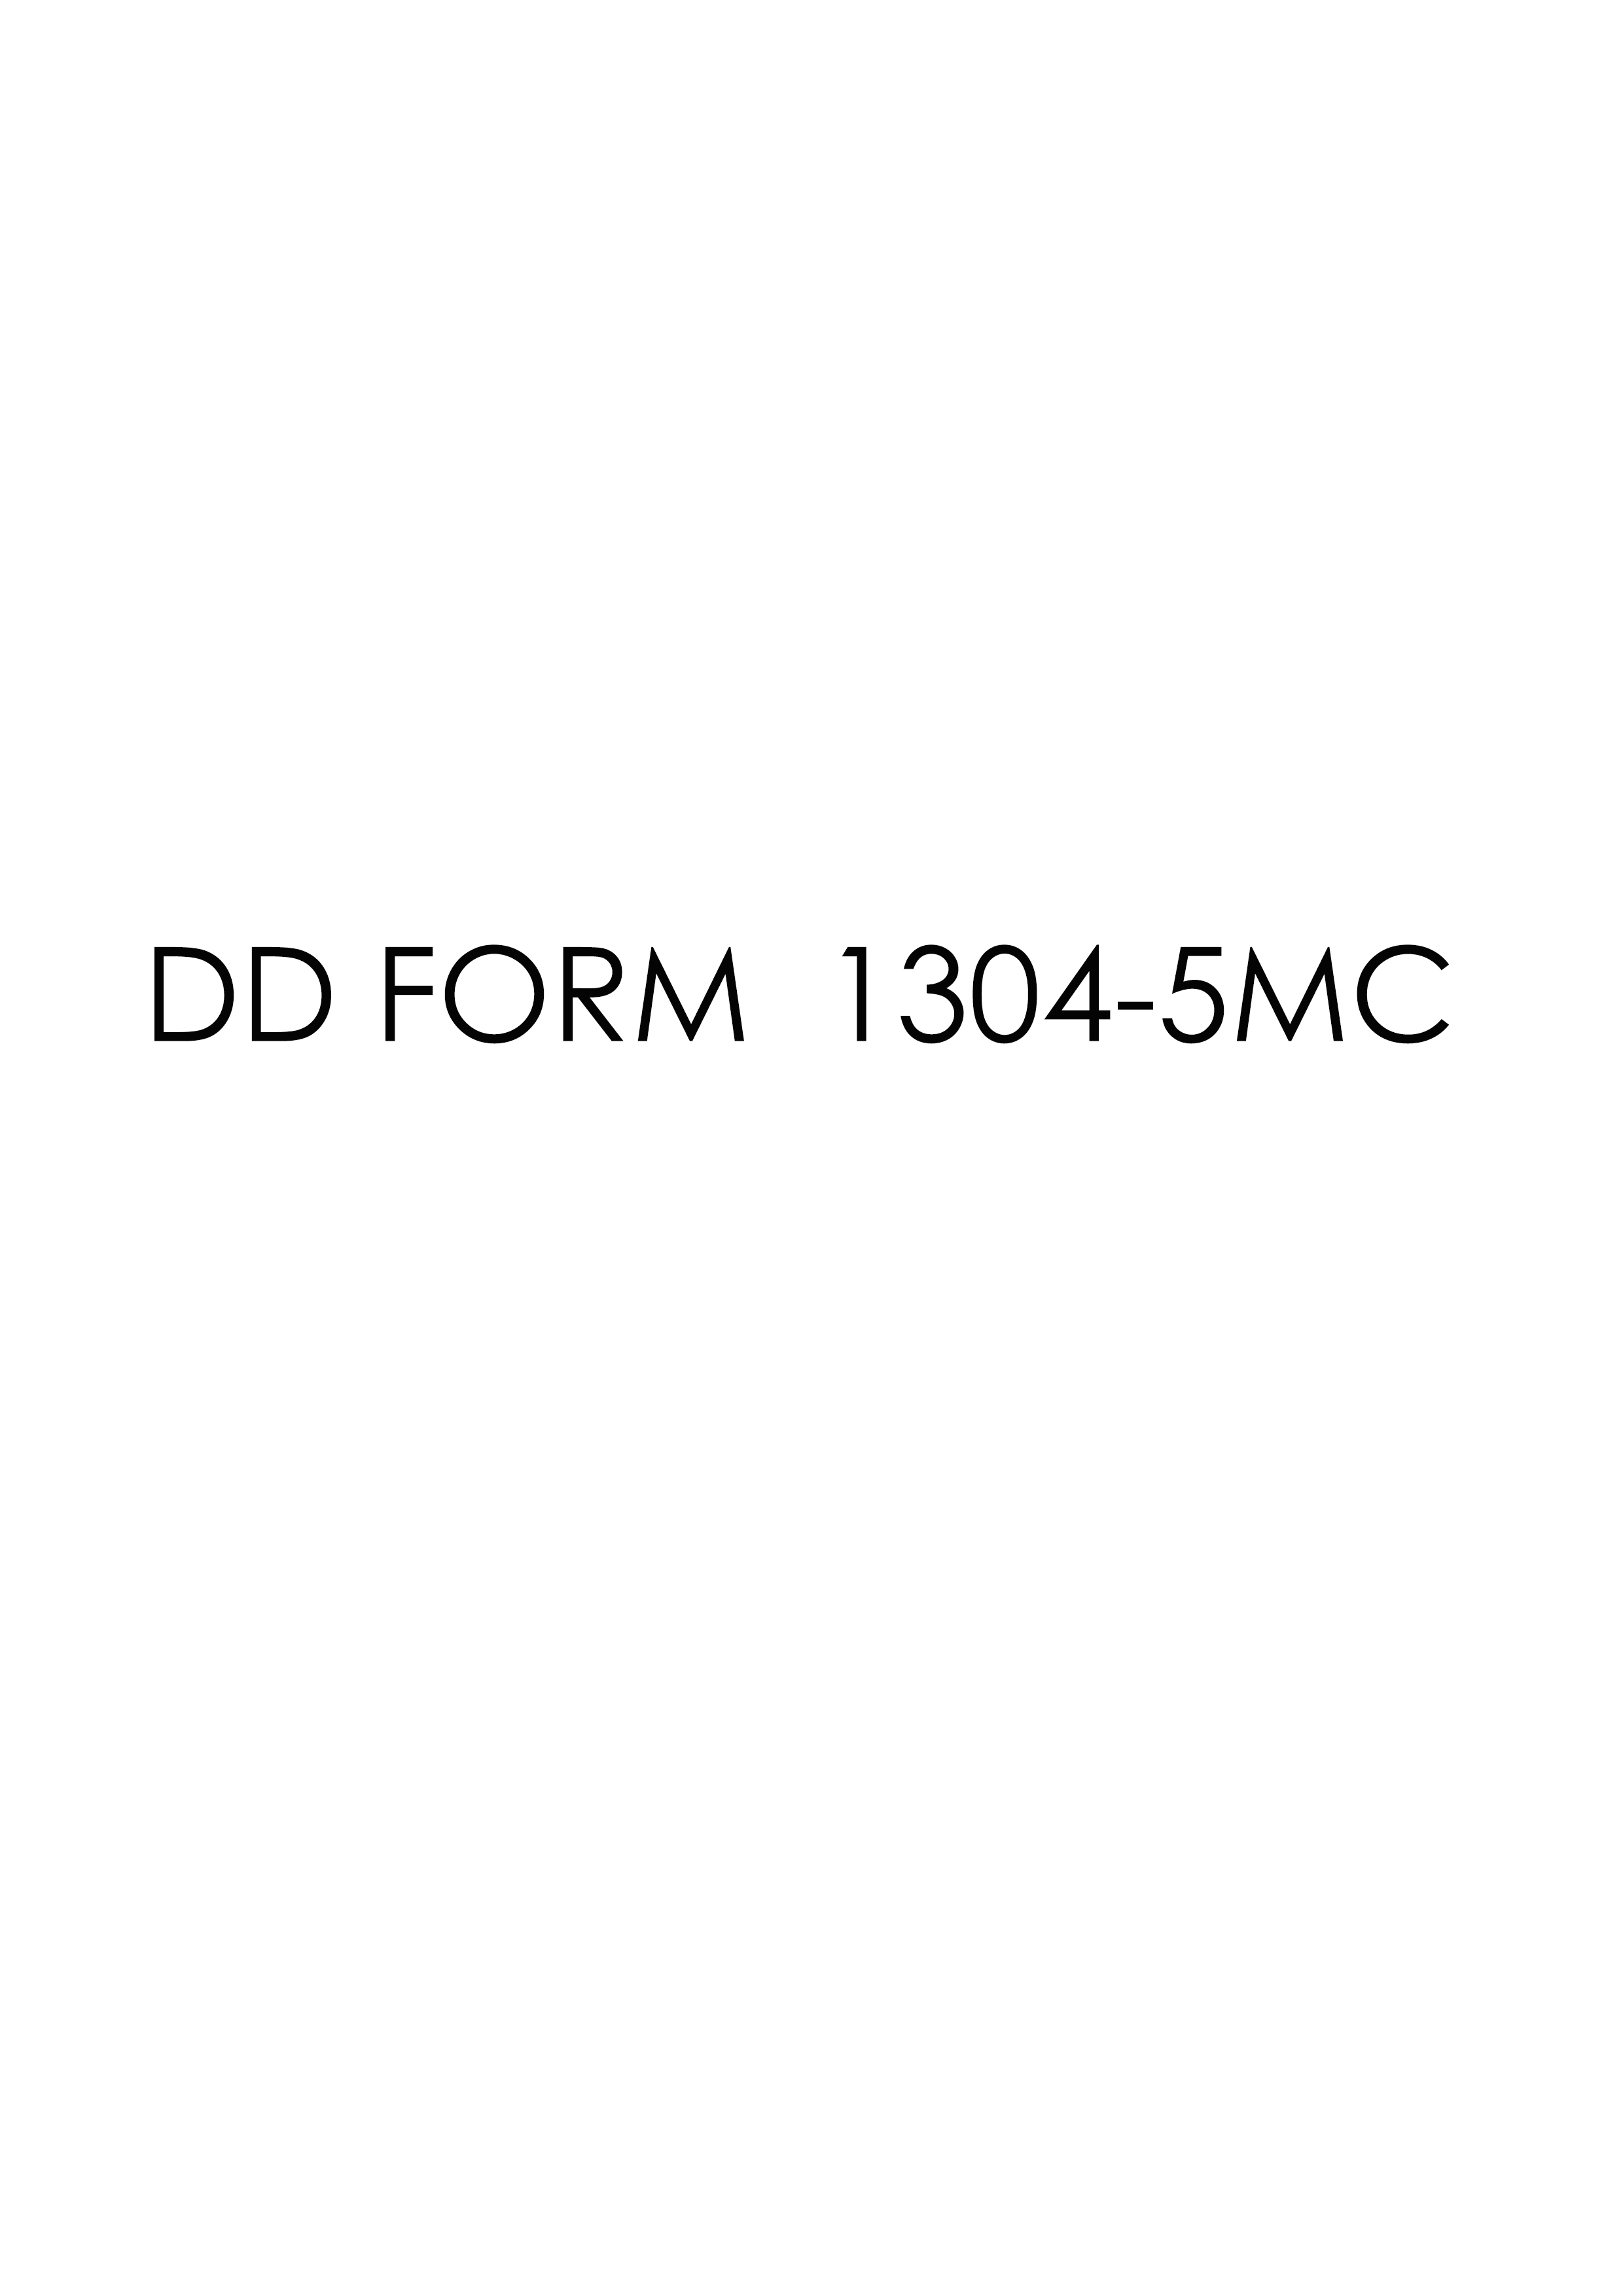 Download dd 1304-5MC Form